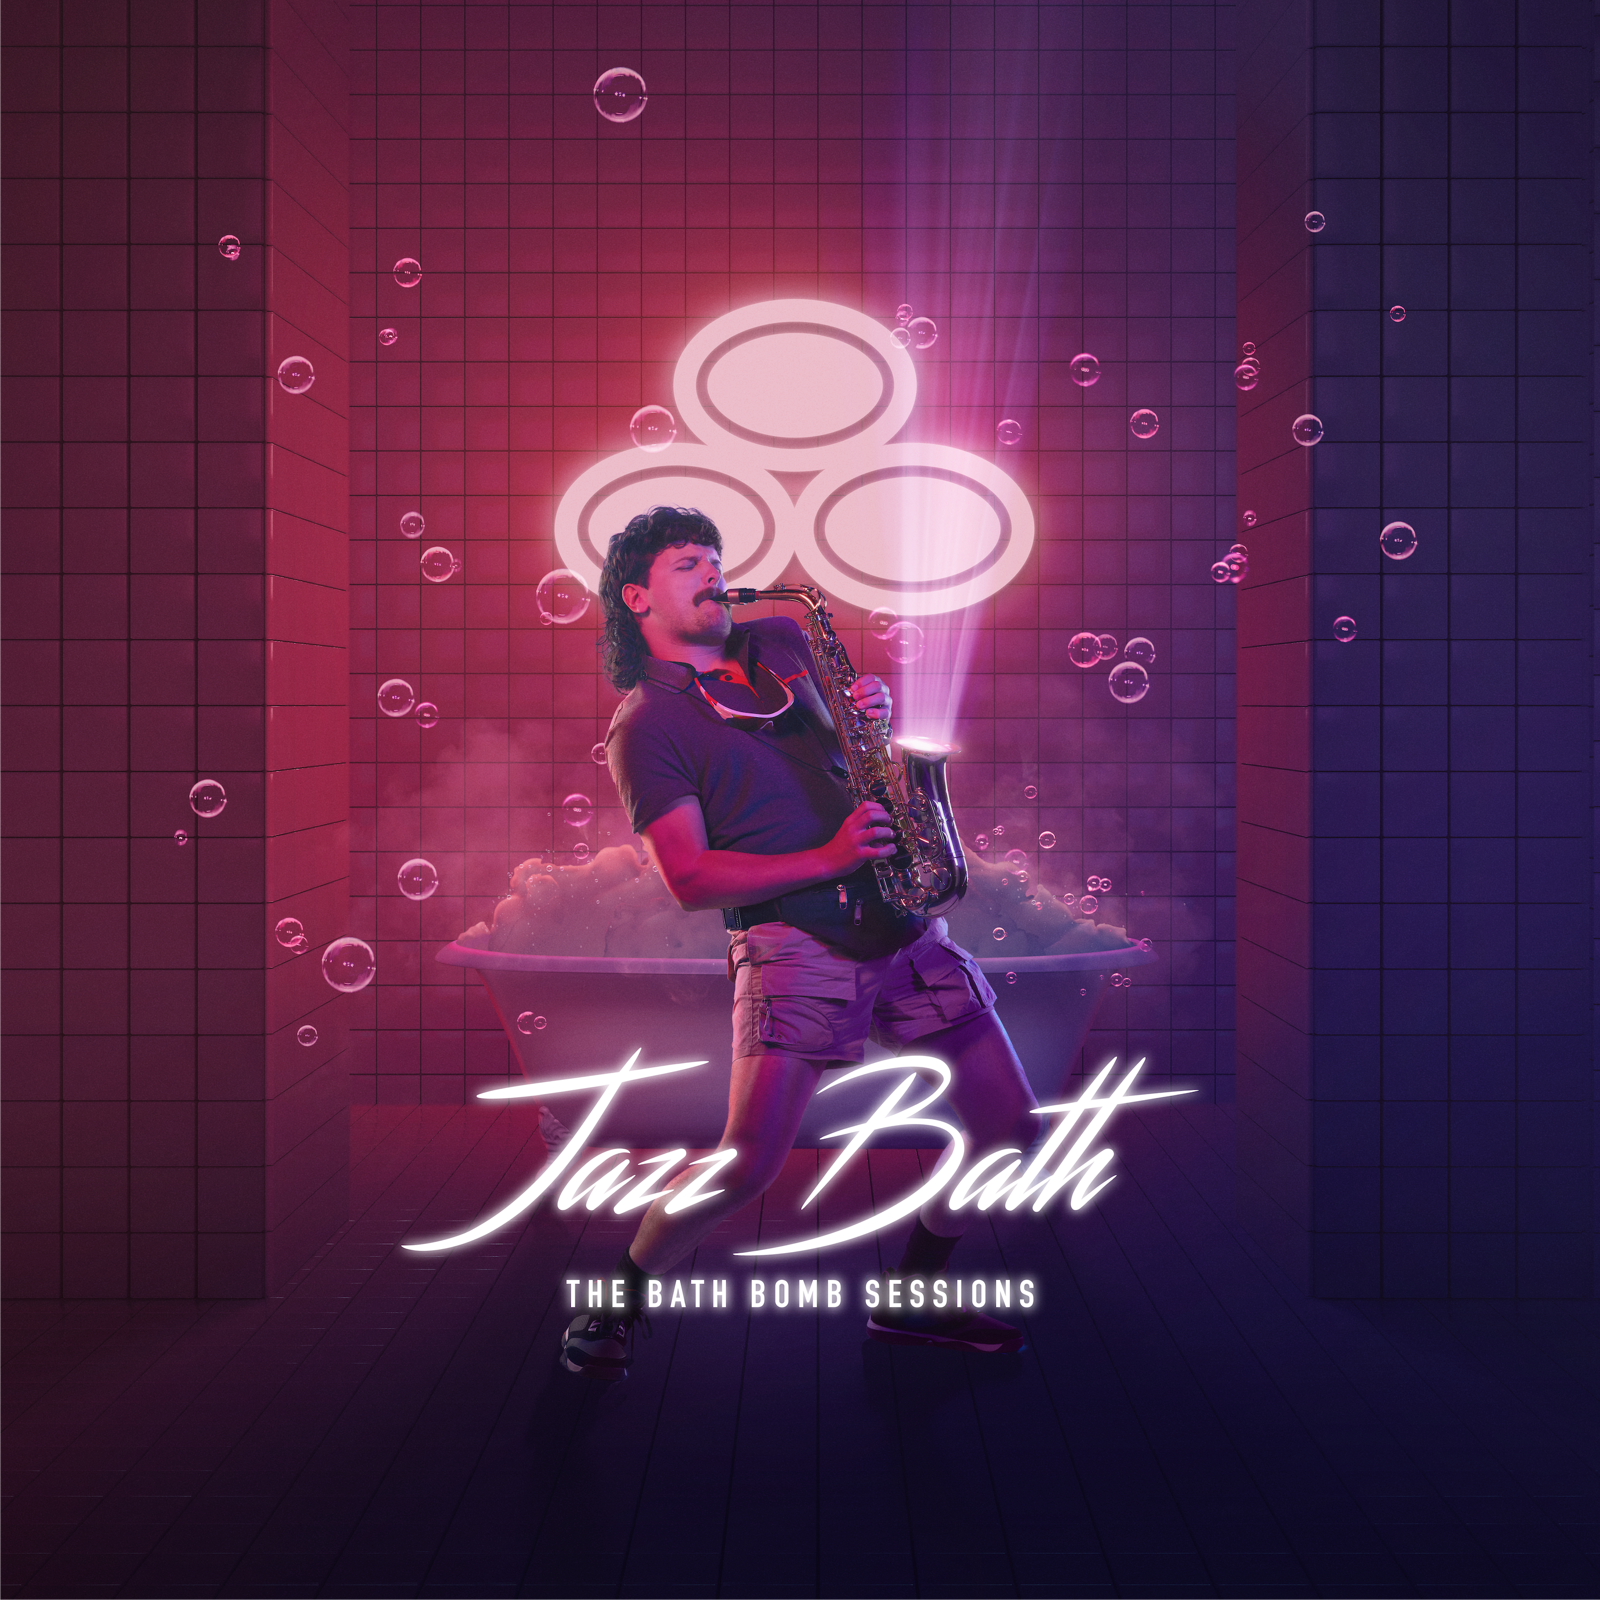 Jazz Bath EP Release with State Farm